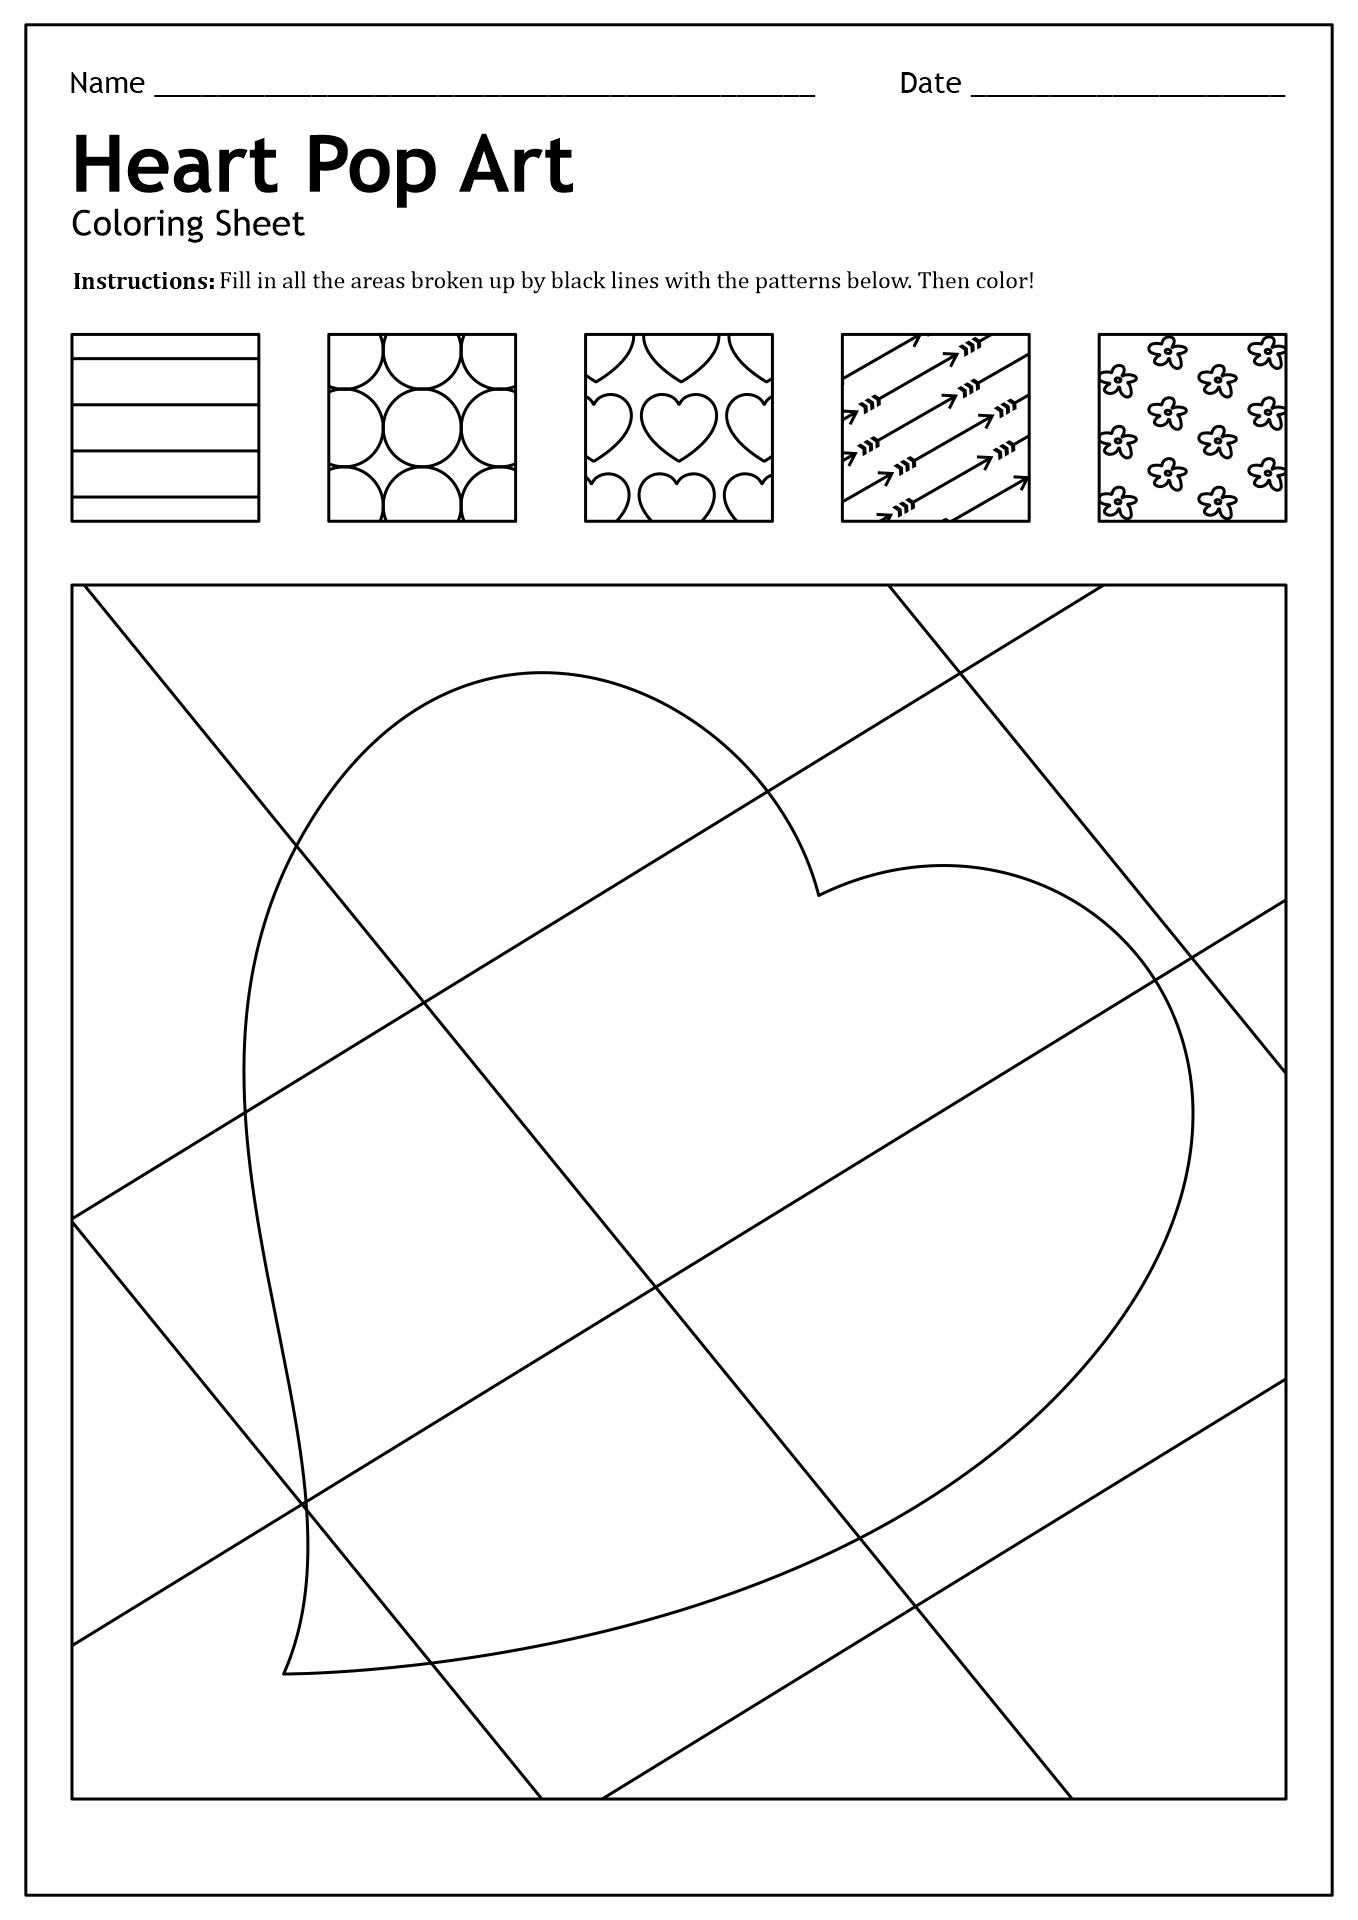 Heart Pop Art Coloring Sheets Image